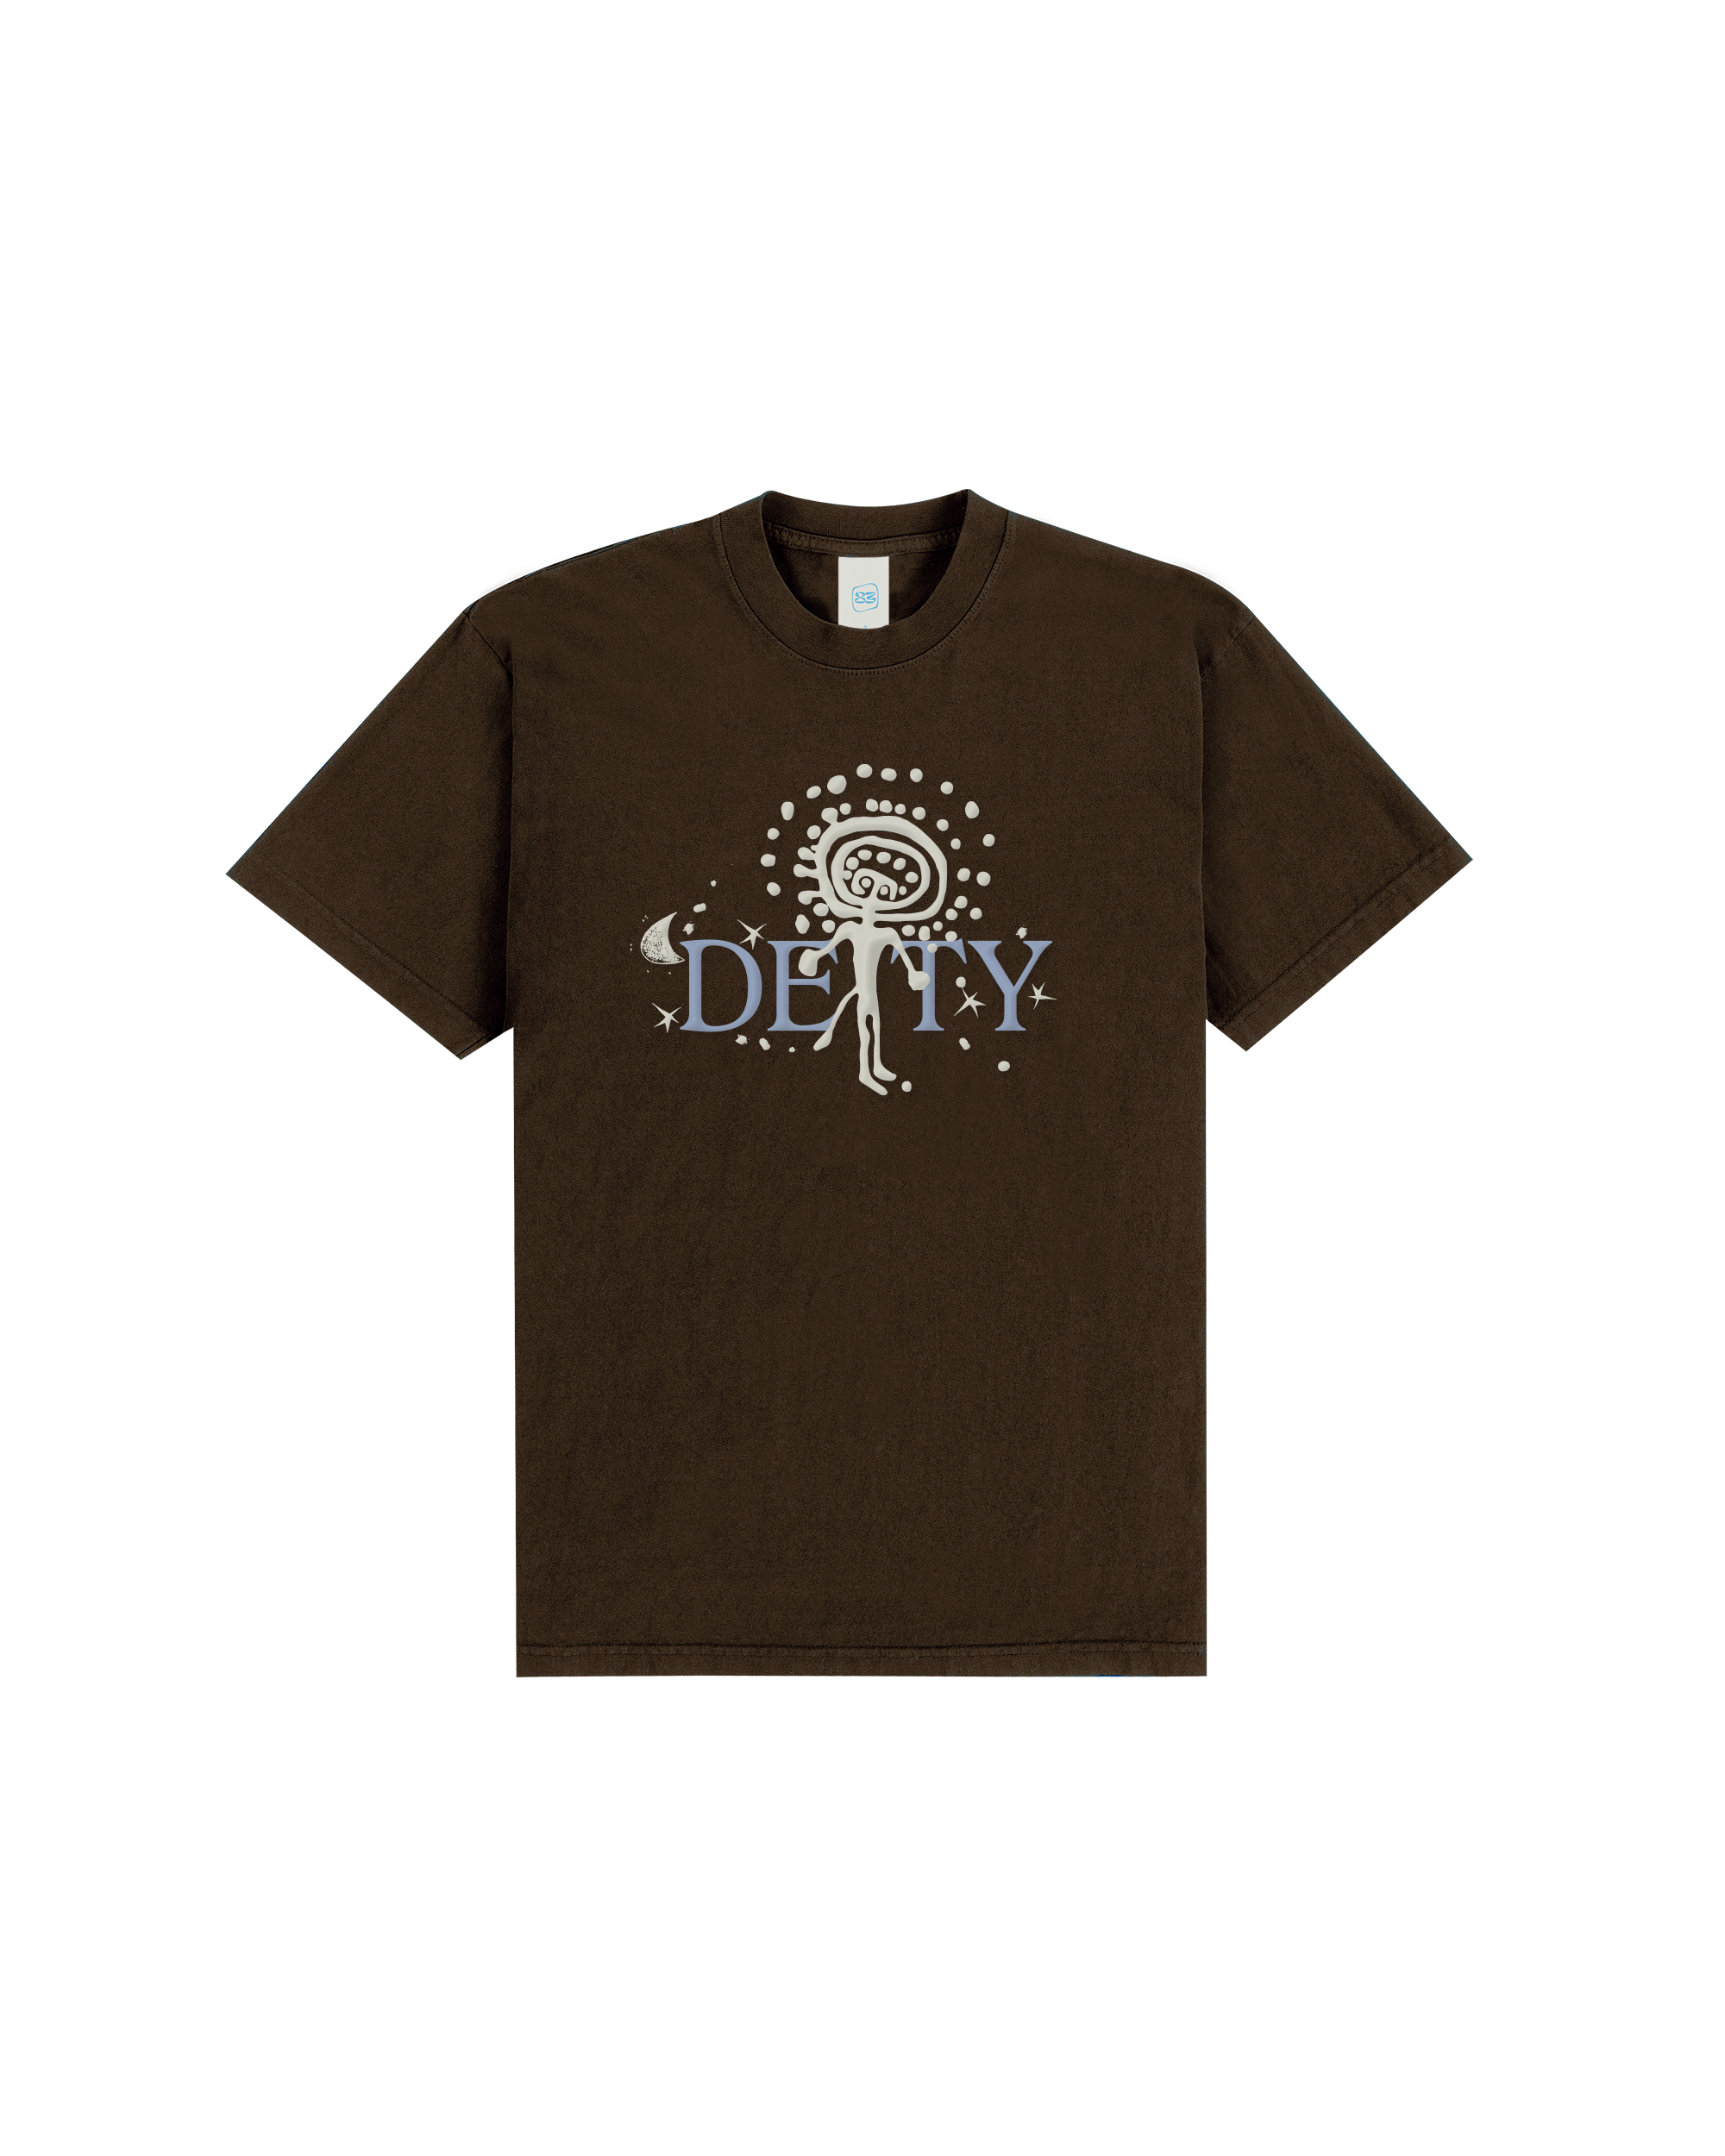 Deity T-shirt - Chocolate